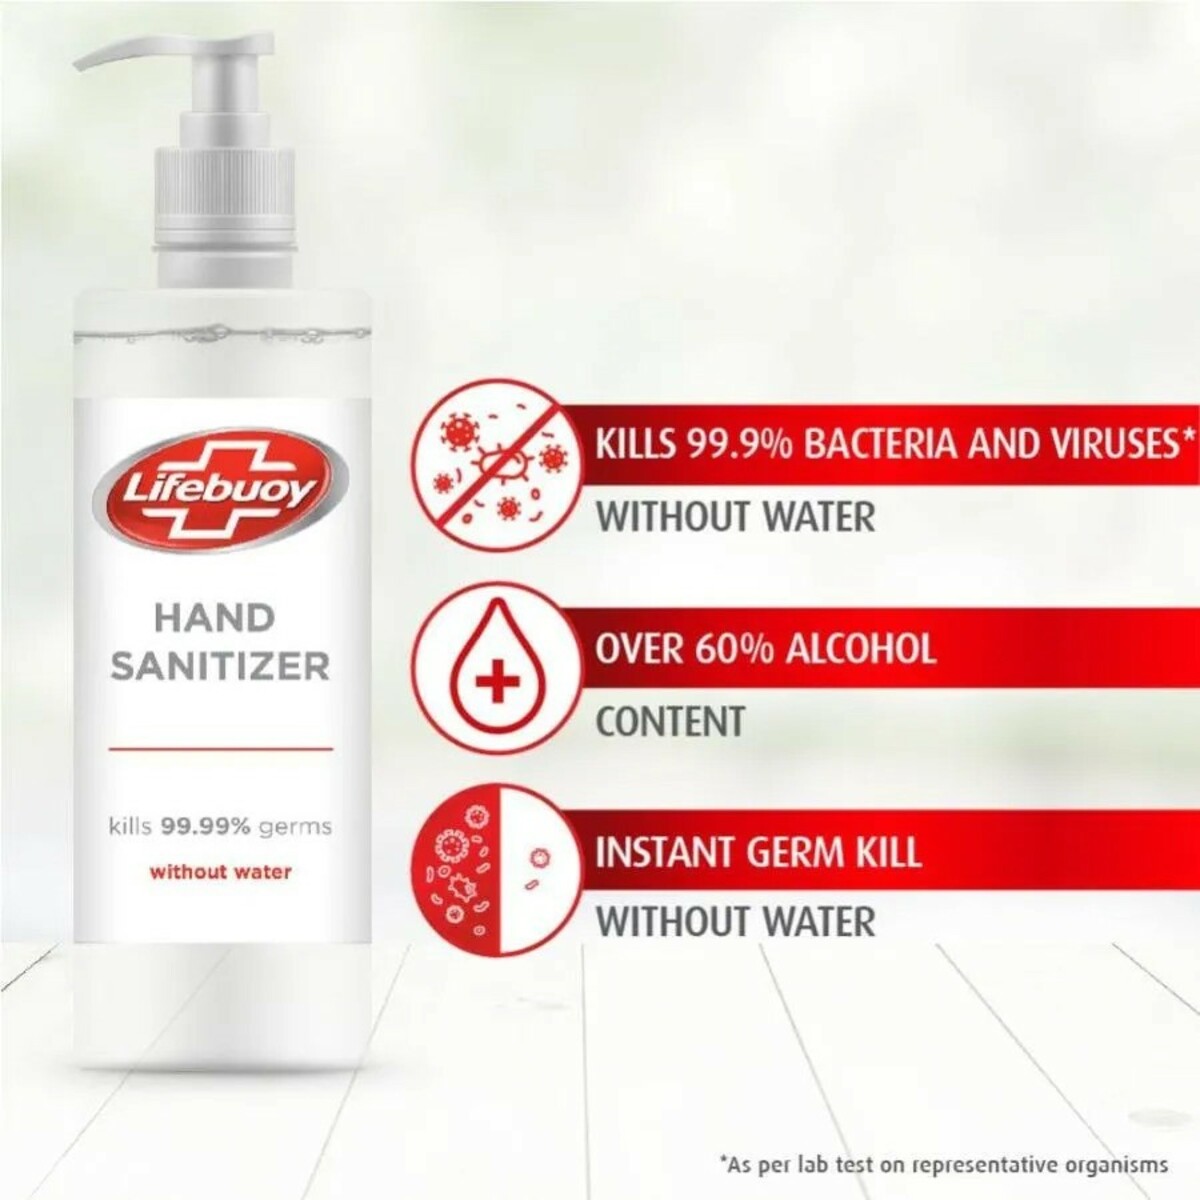 Lifebuoy  Hand Sanitizer Total10 50ml